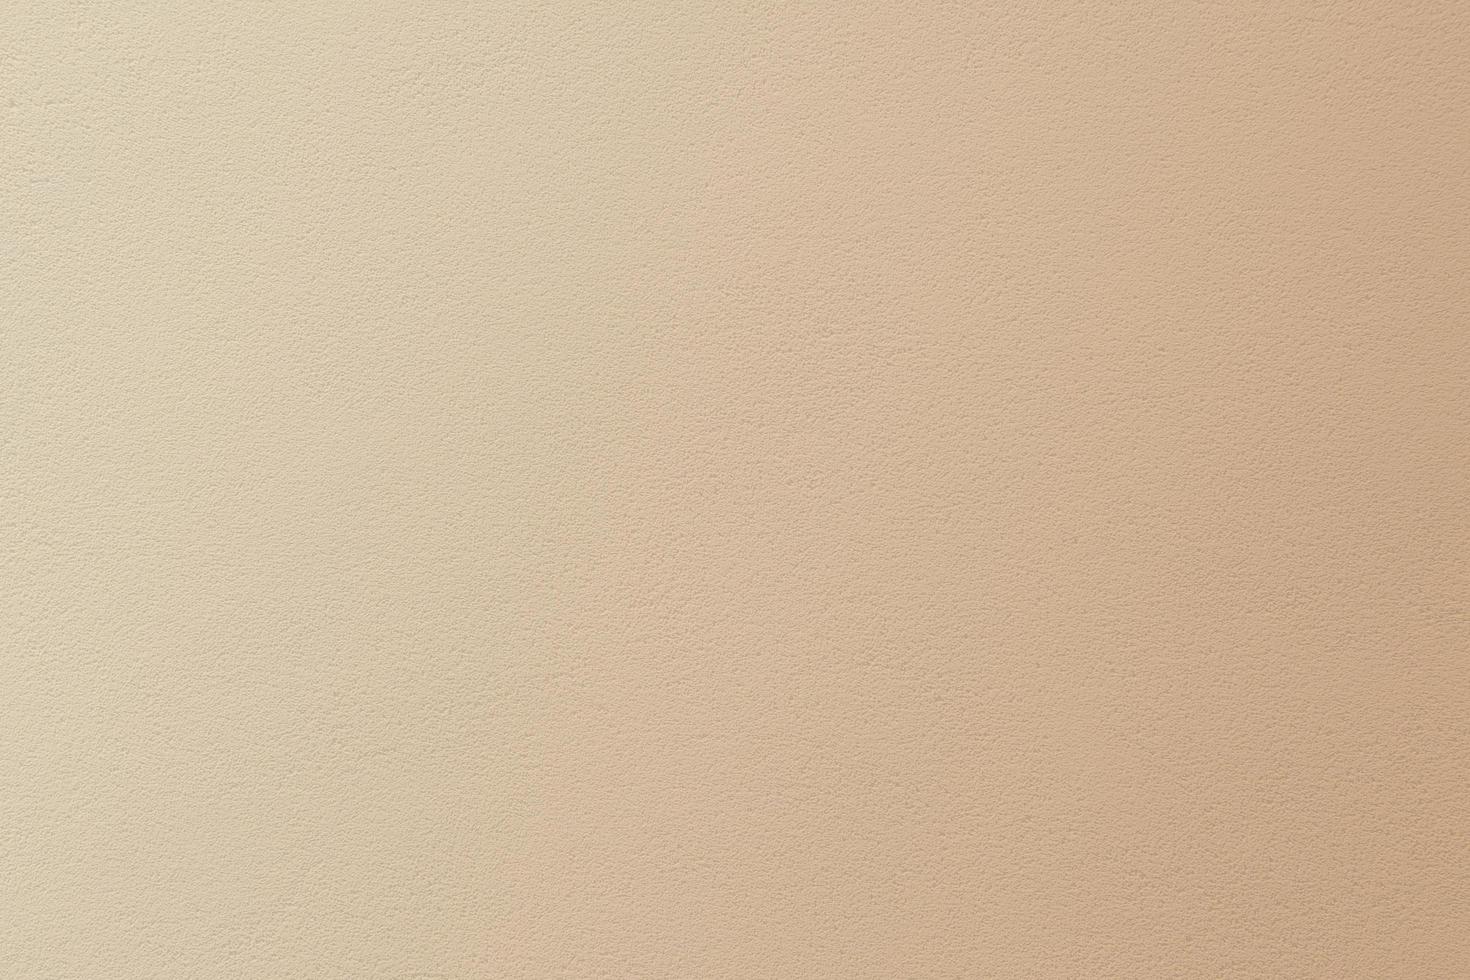 Clean brown pastel gradient paper texture photo